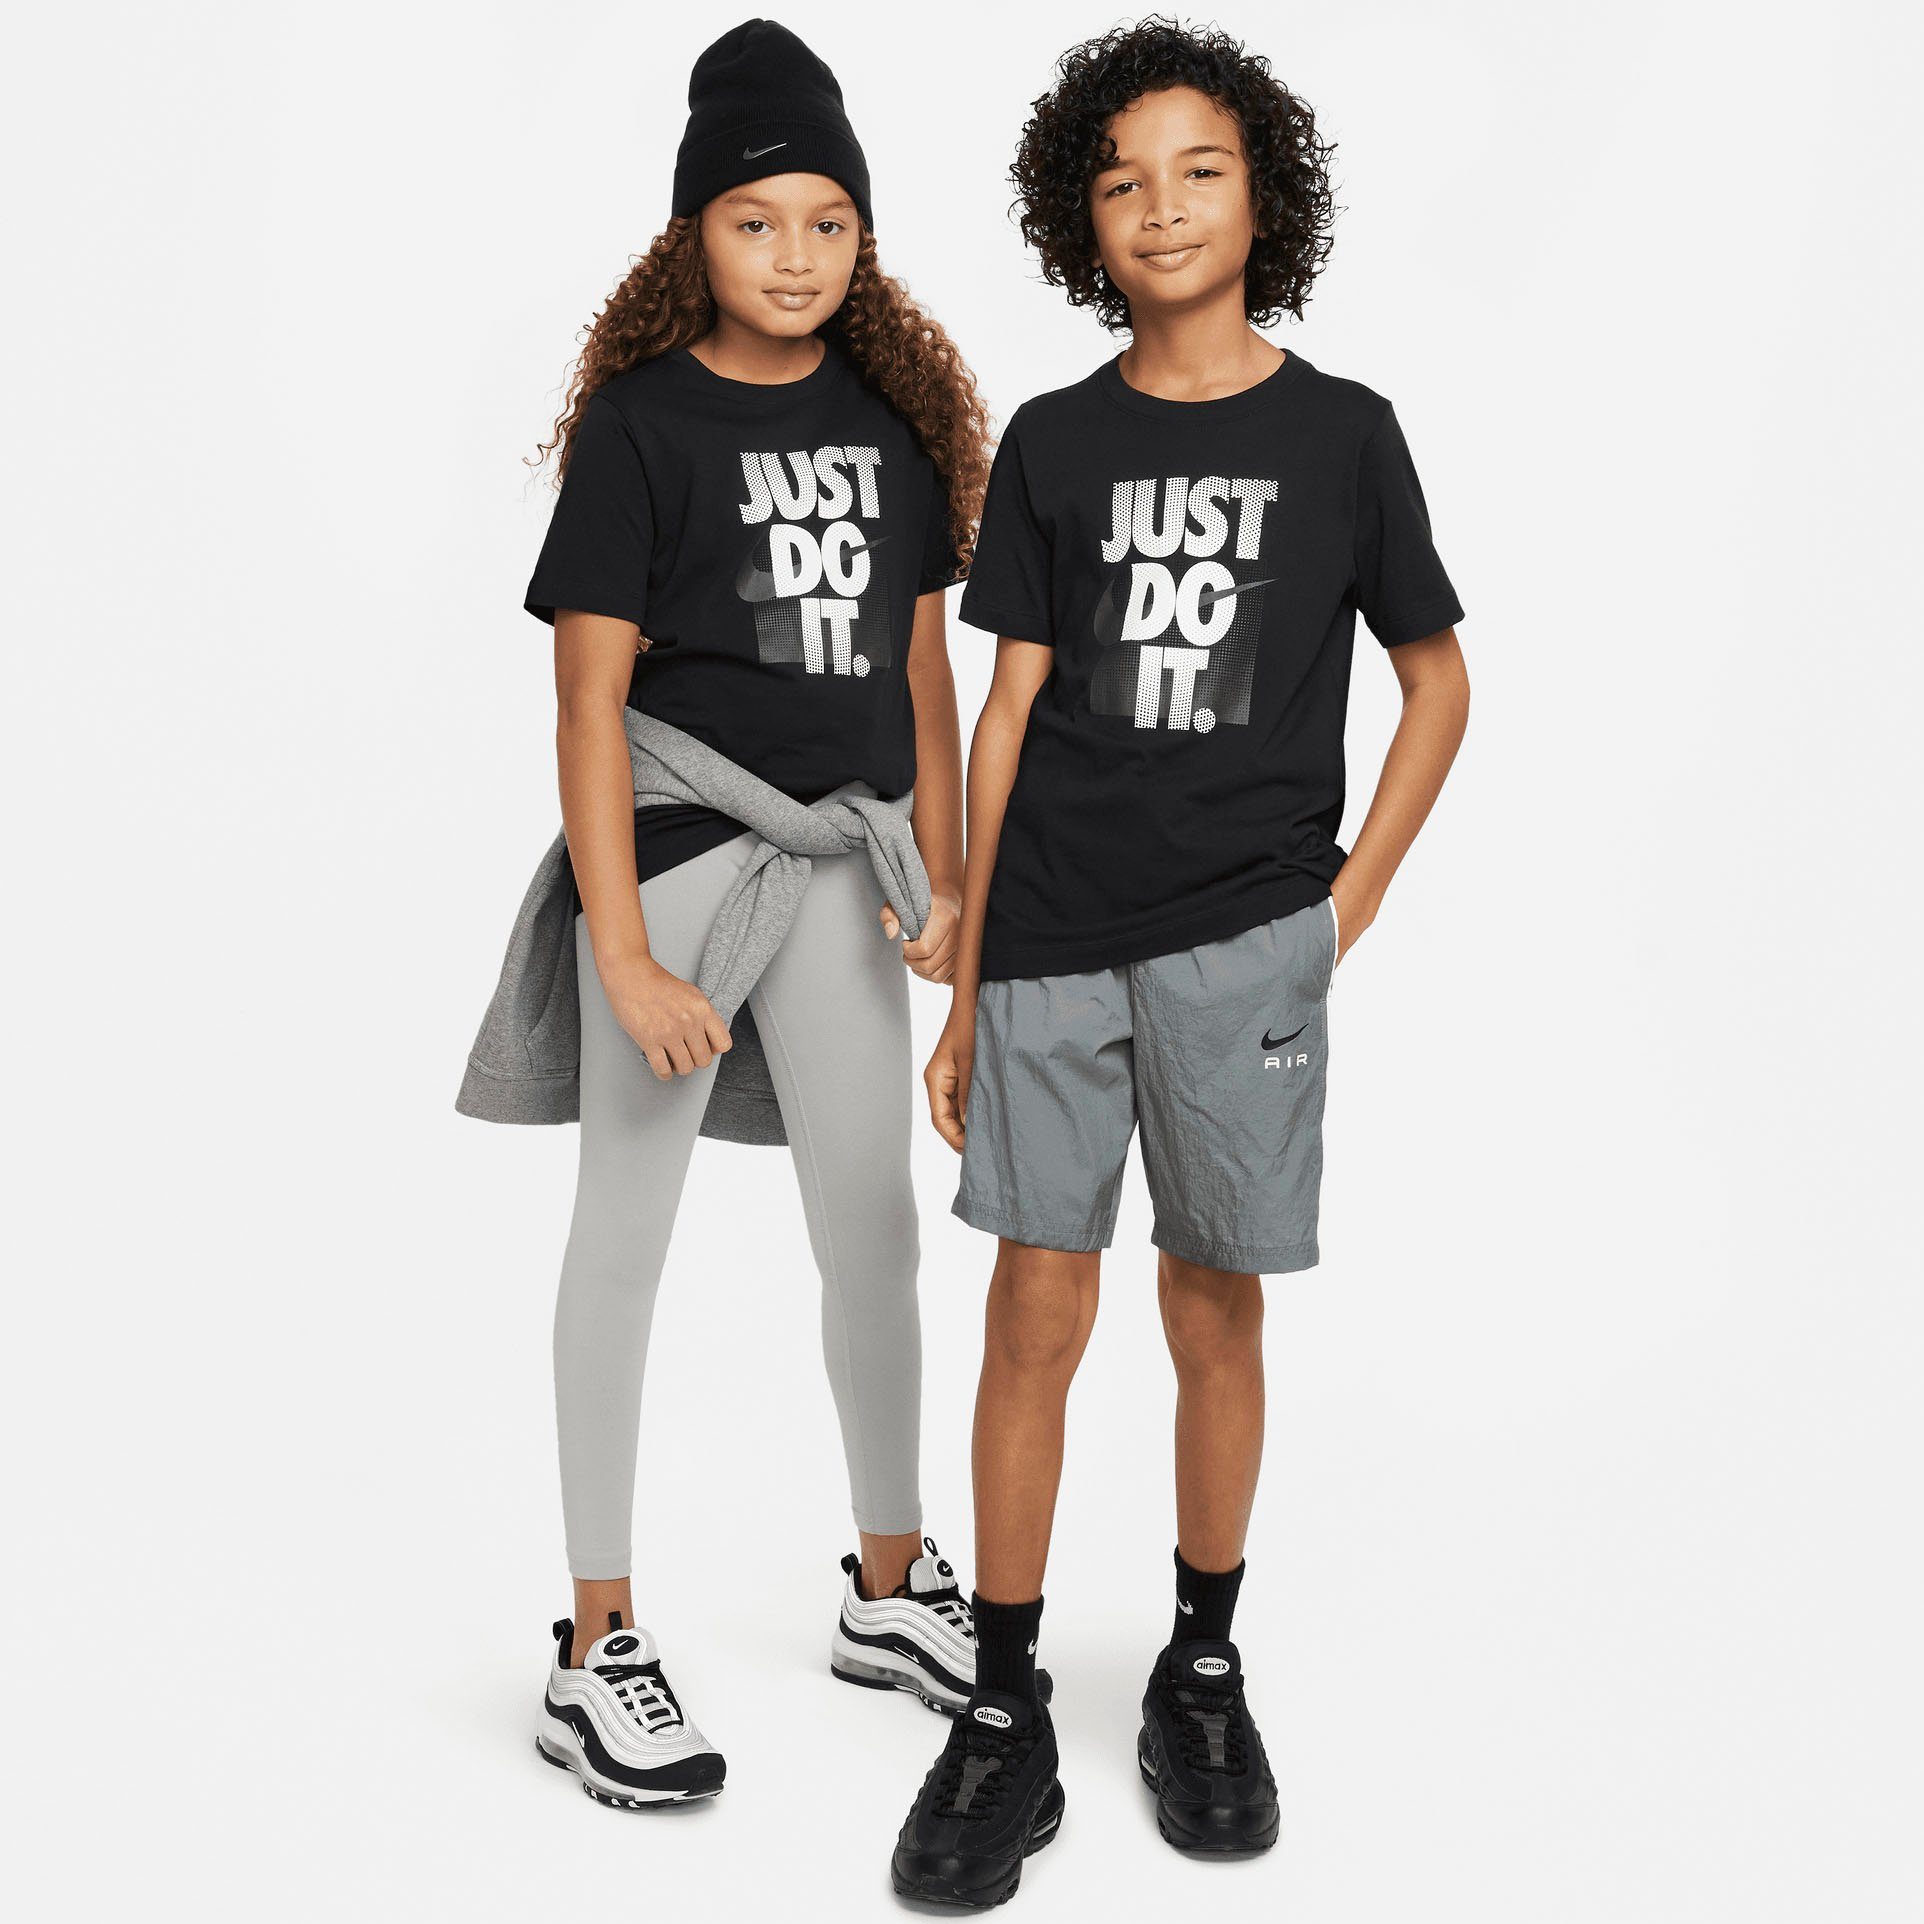 Nike Sportswear T-Shirt Big Kids' schwarz T-Shirt